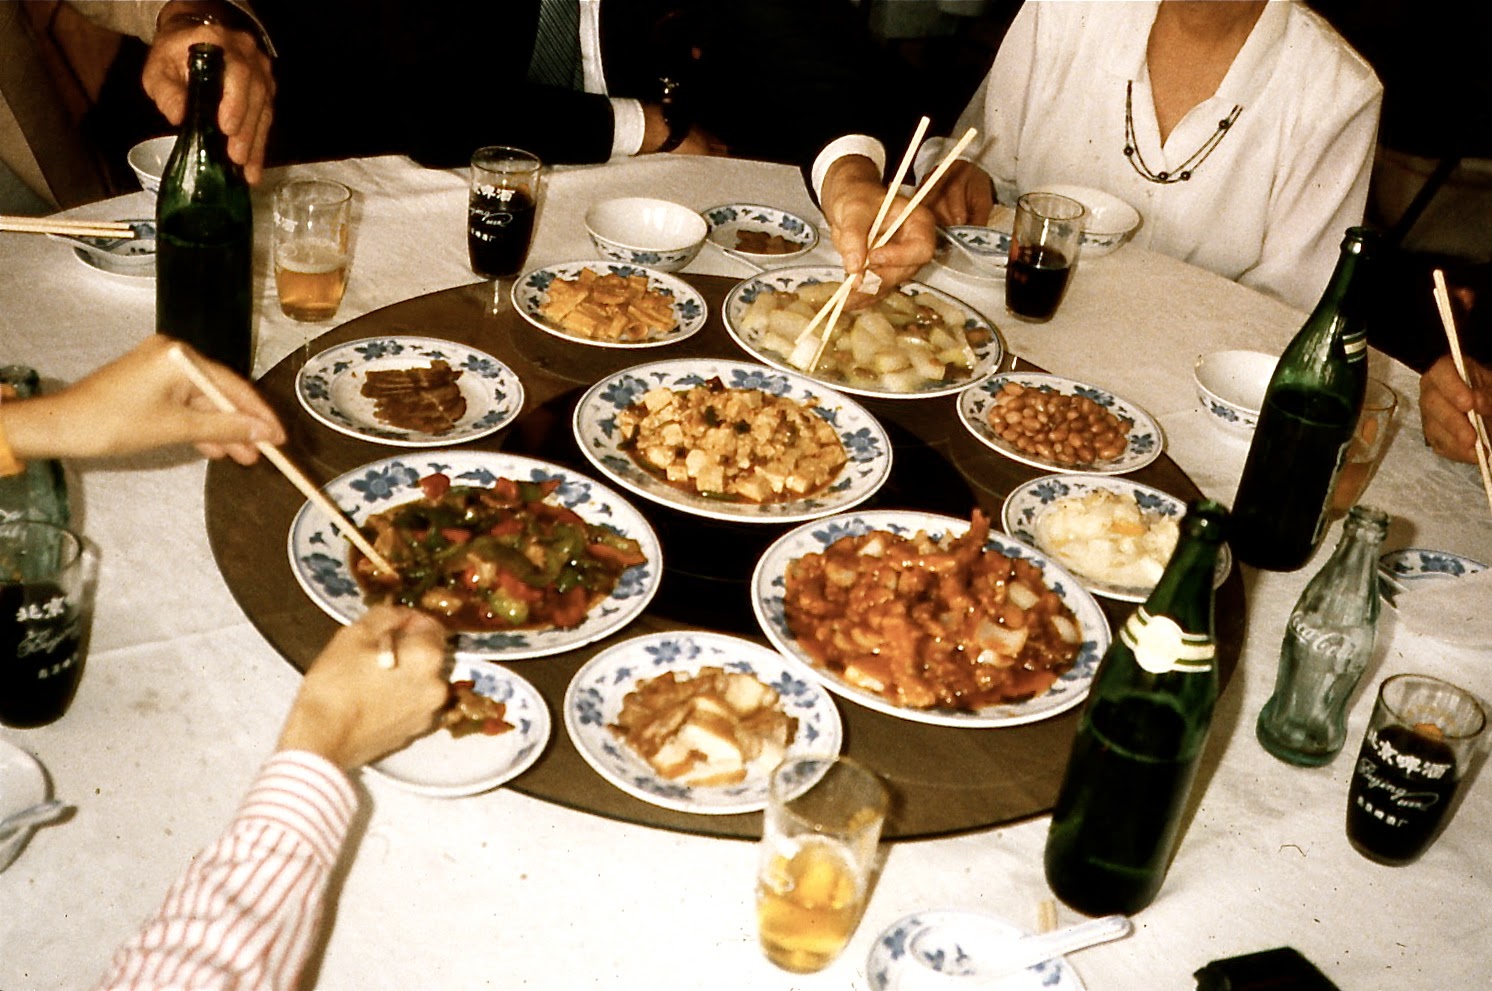 https://3.bp.blogspot.com/-wHQIVzepau8/U2HmxMxiHgI/AAAAAAAACBg/q71C_LwR7ek/s1600/Restaurant_serving_turntable_restaurant_in_China,_1987.jpg